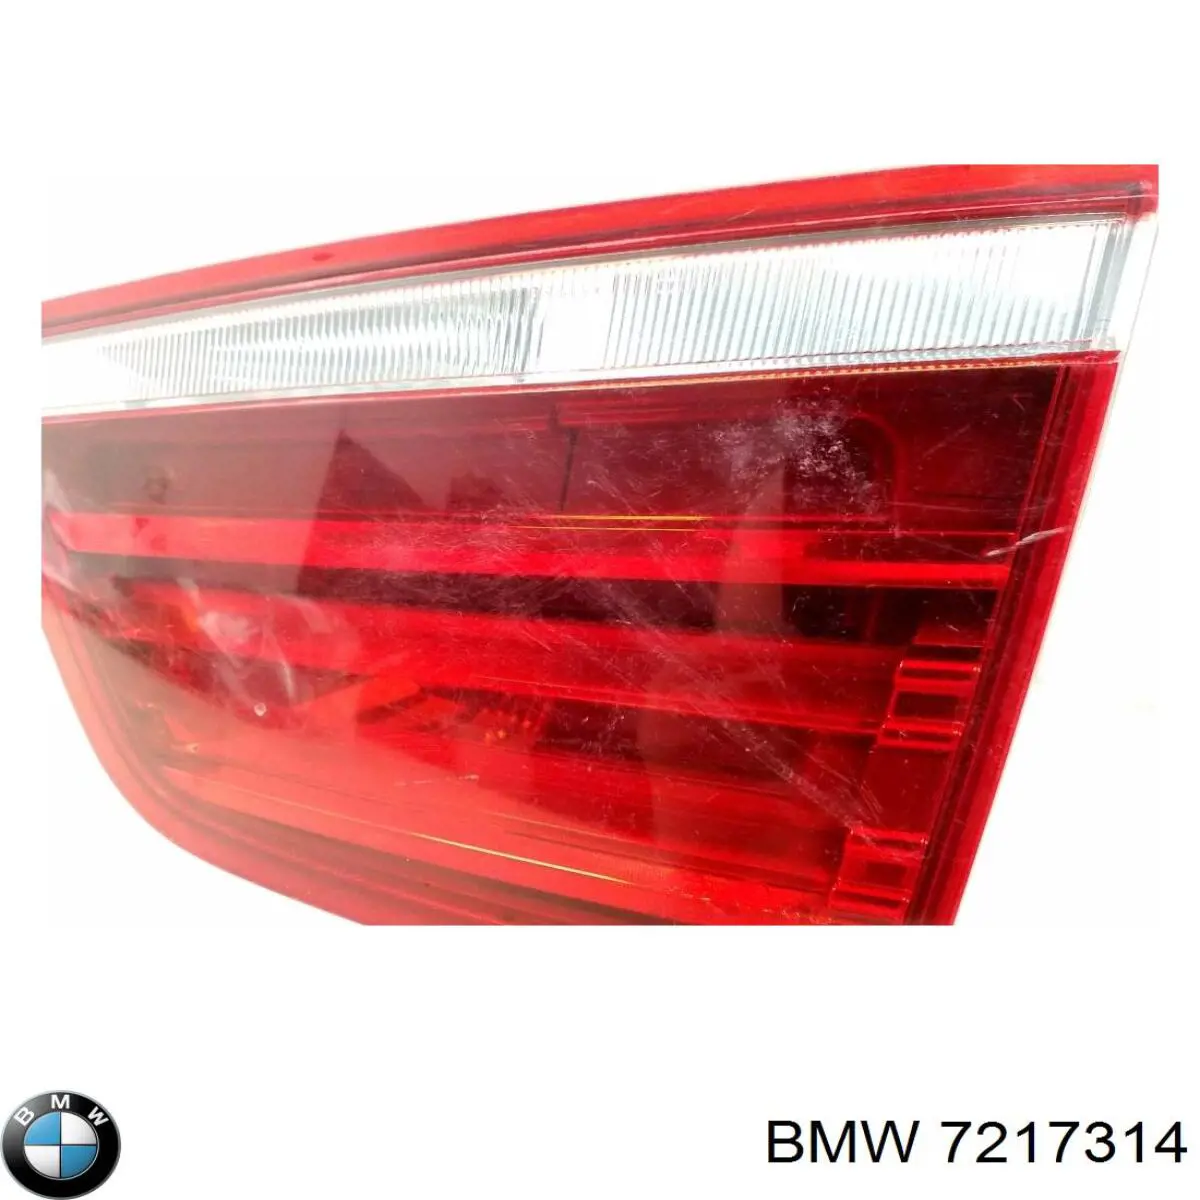 7217314 BMW lanterna traseira direita interna